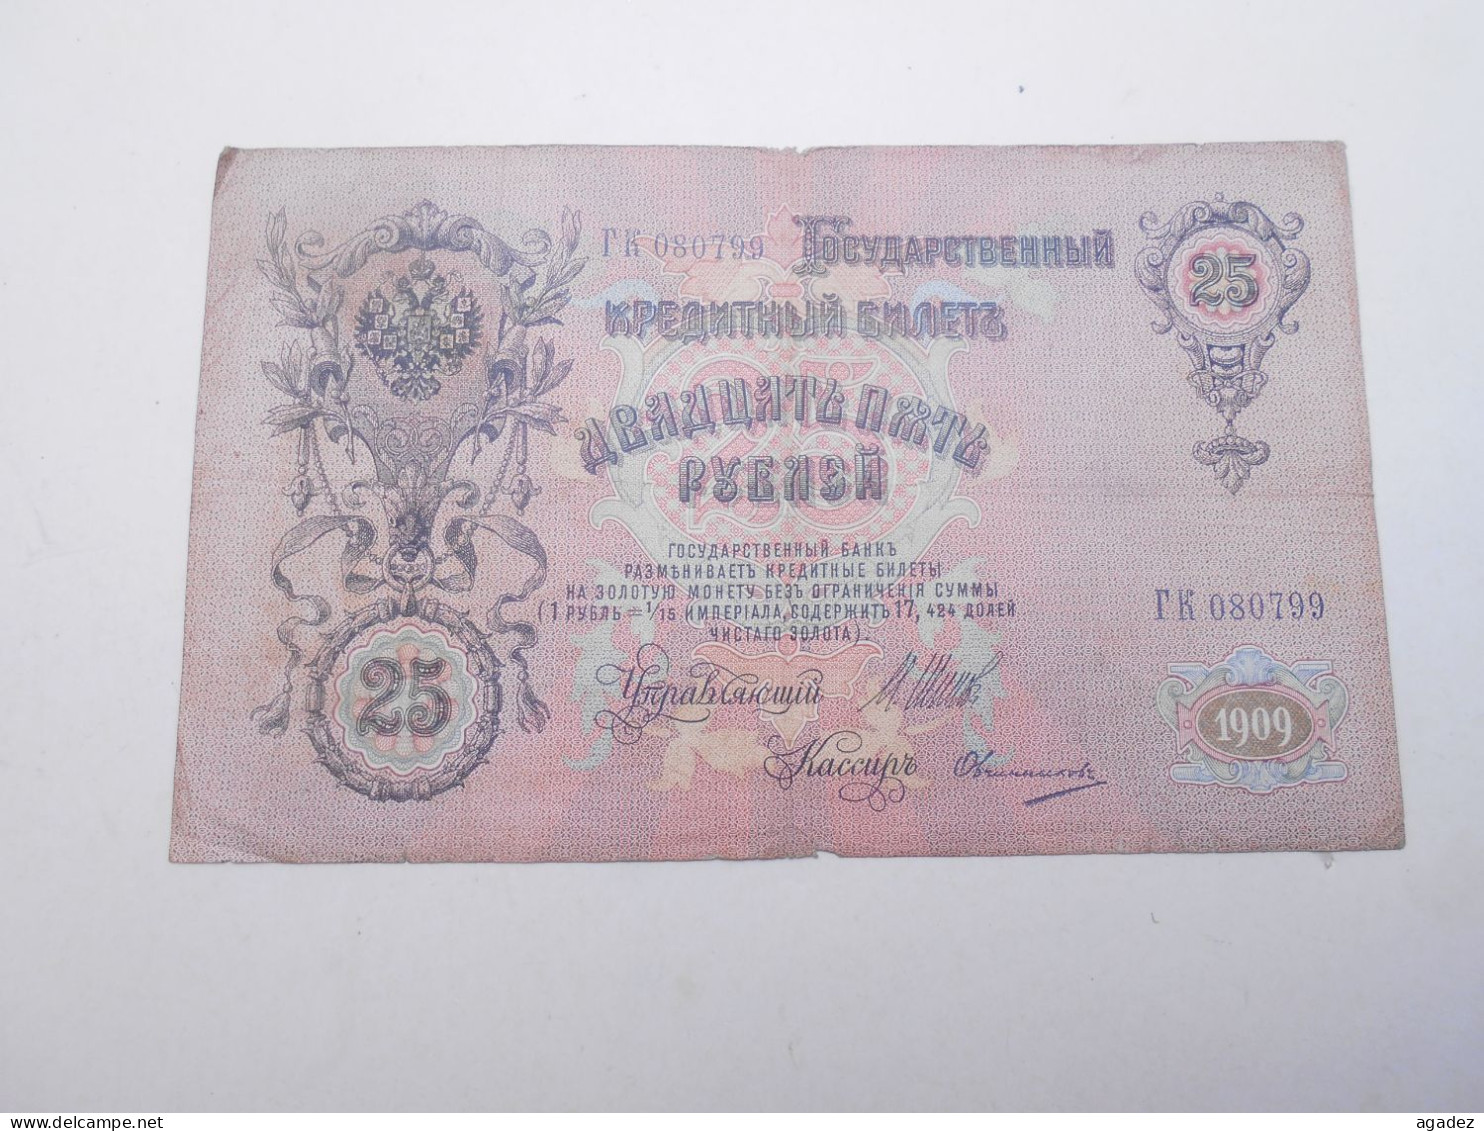 Ancien Billet De Banque  Russie  25 Roubles  1909 - Russia